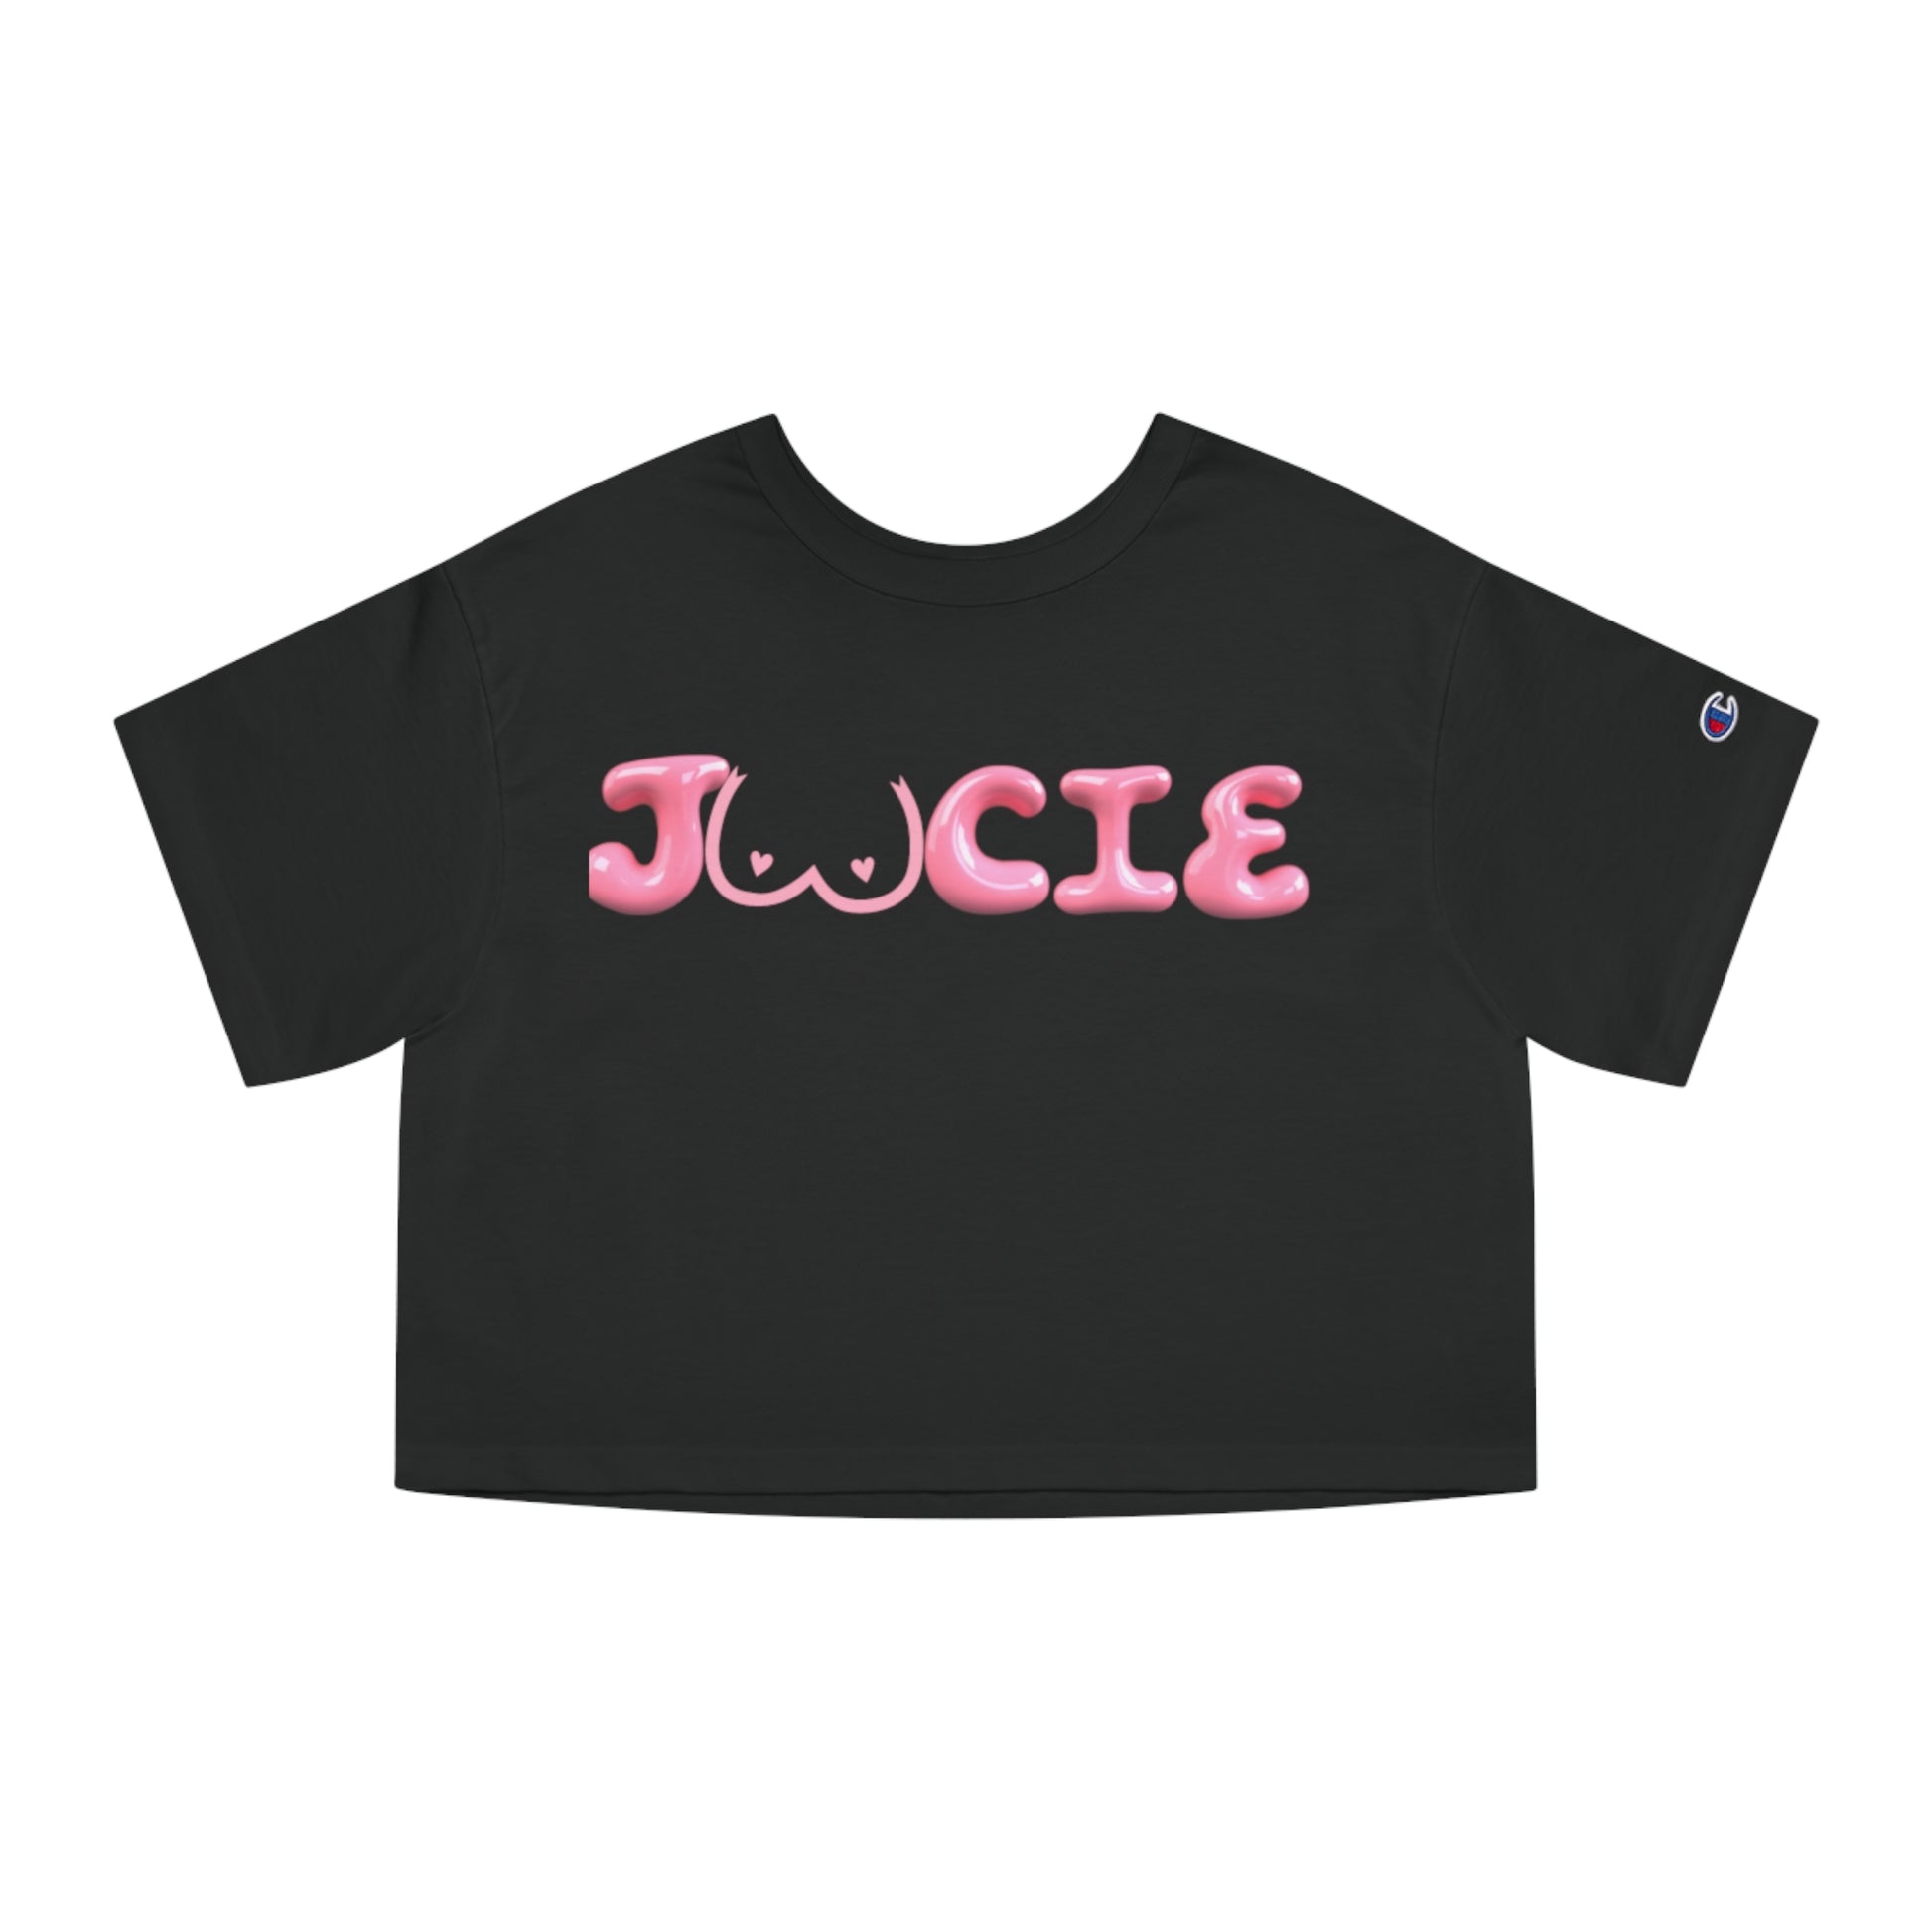 Juucie Women's Cropped T-Shirt - Juucie